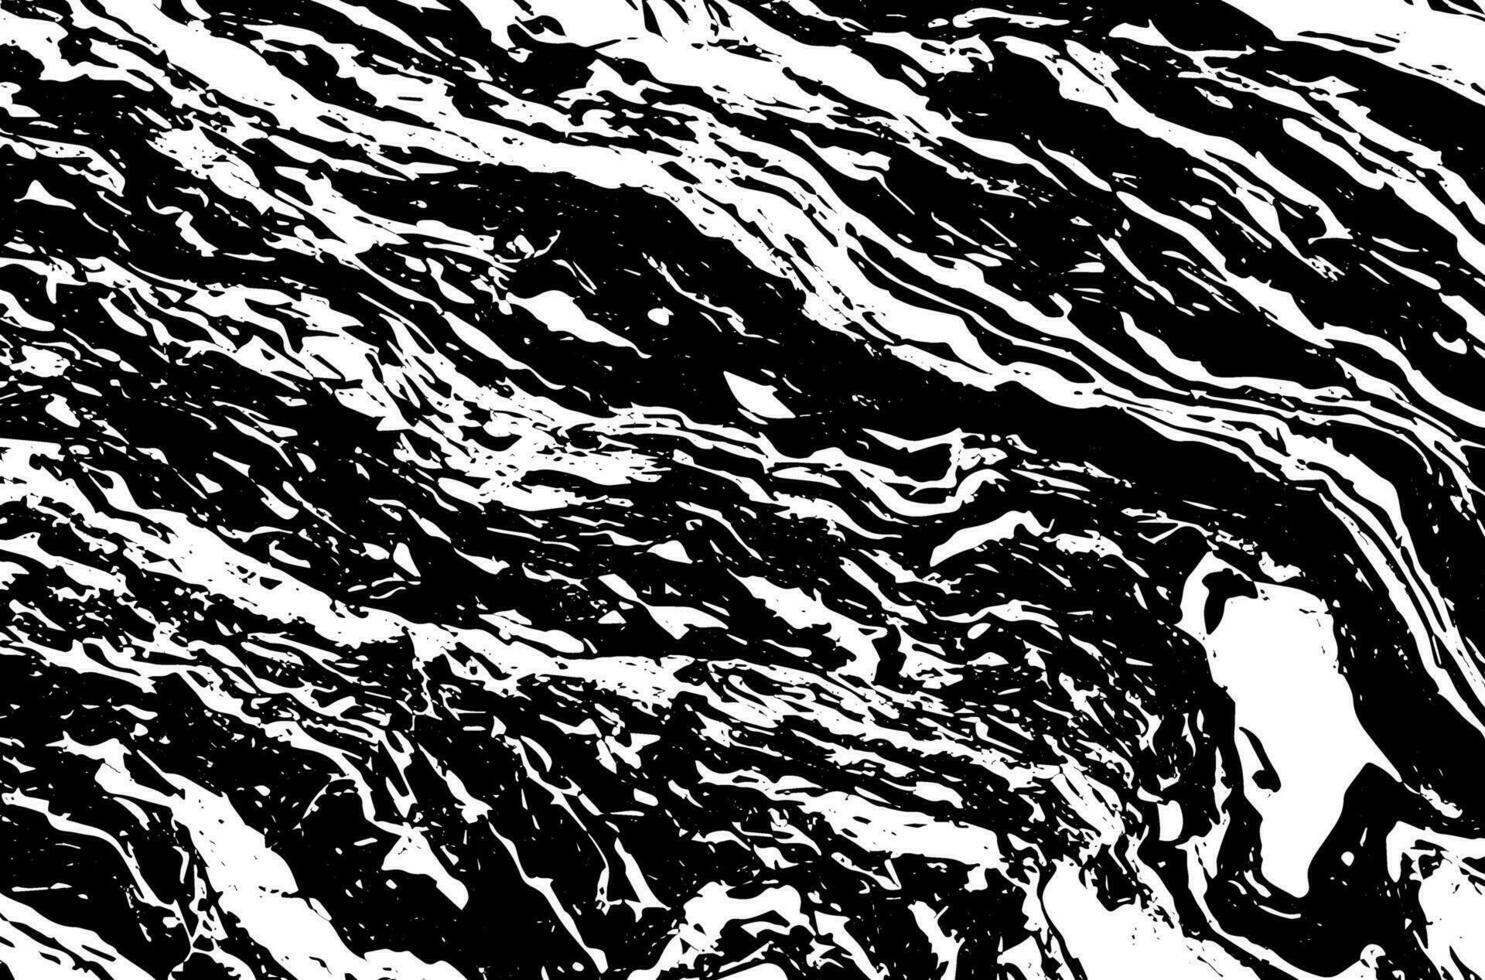 fundo de textura de mármore preto e branco vetor